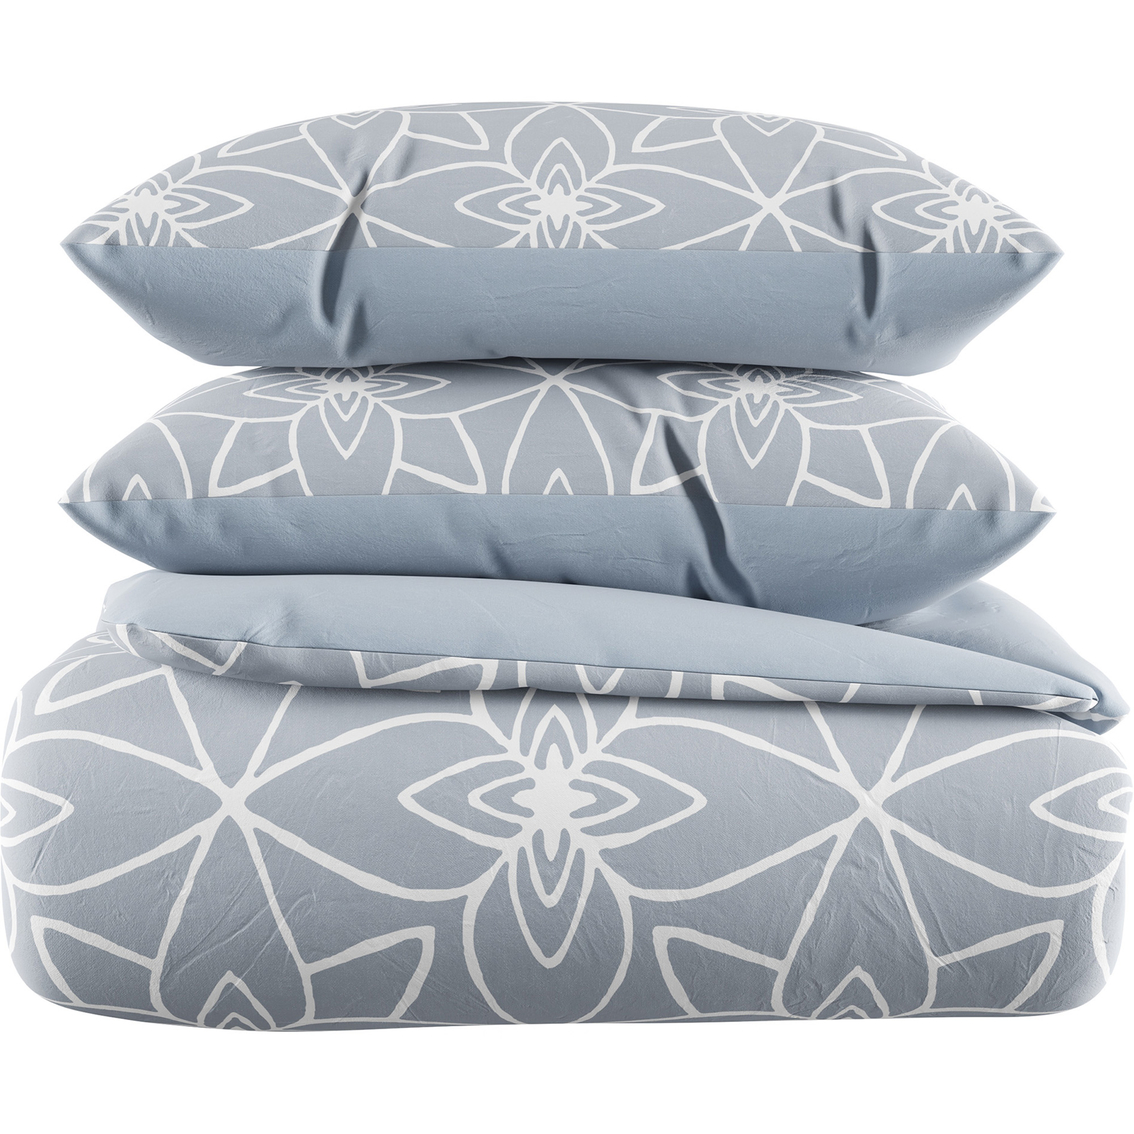 Lavish Home 3 pc. Comforter Set with Exclusive Stargaze Design - Image 6 of 7